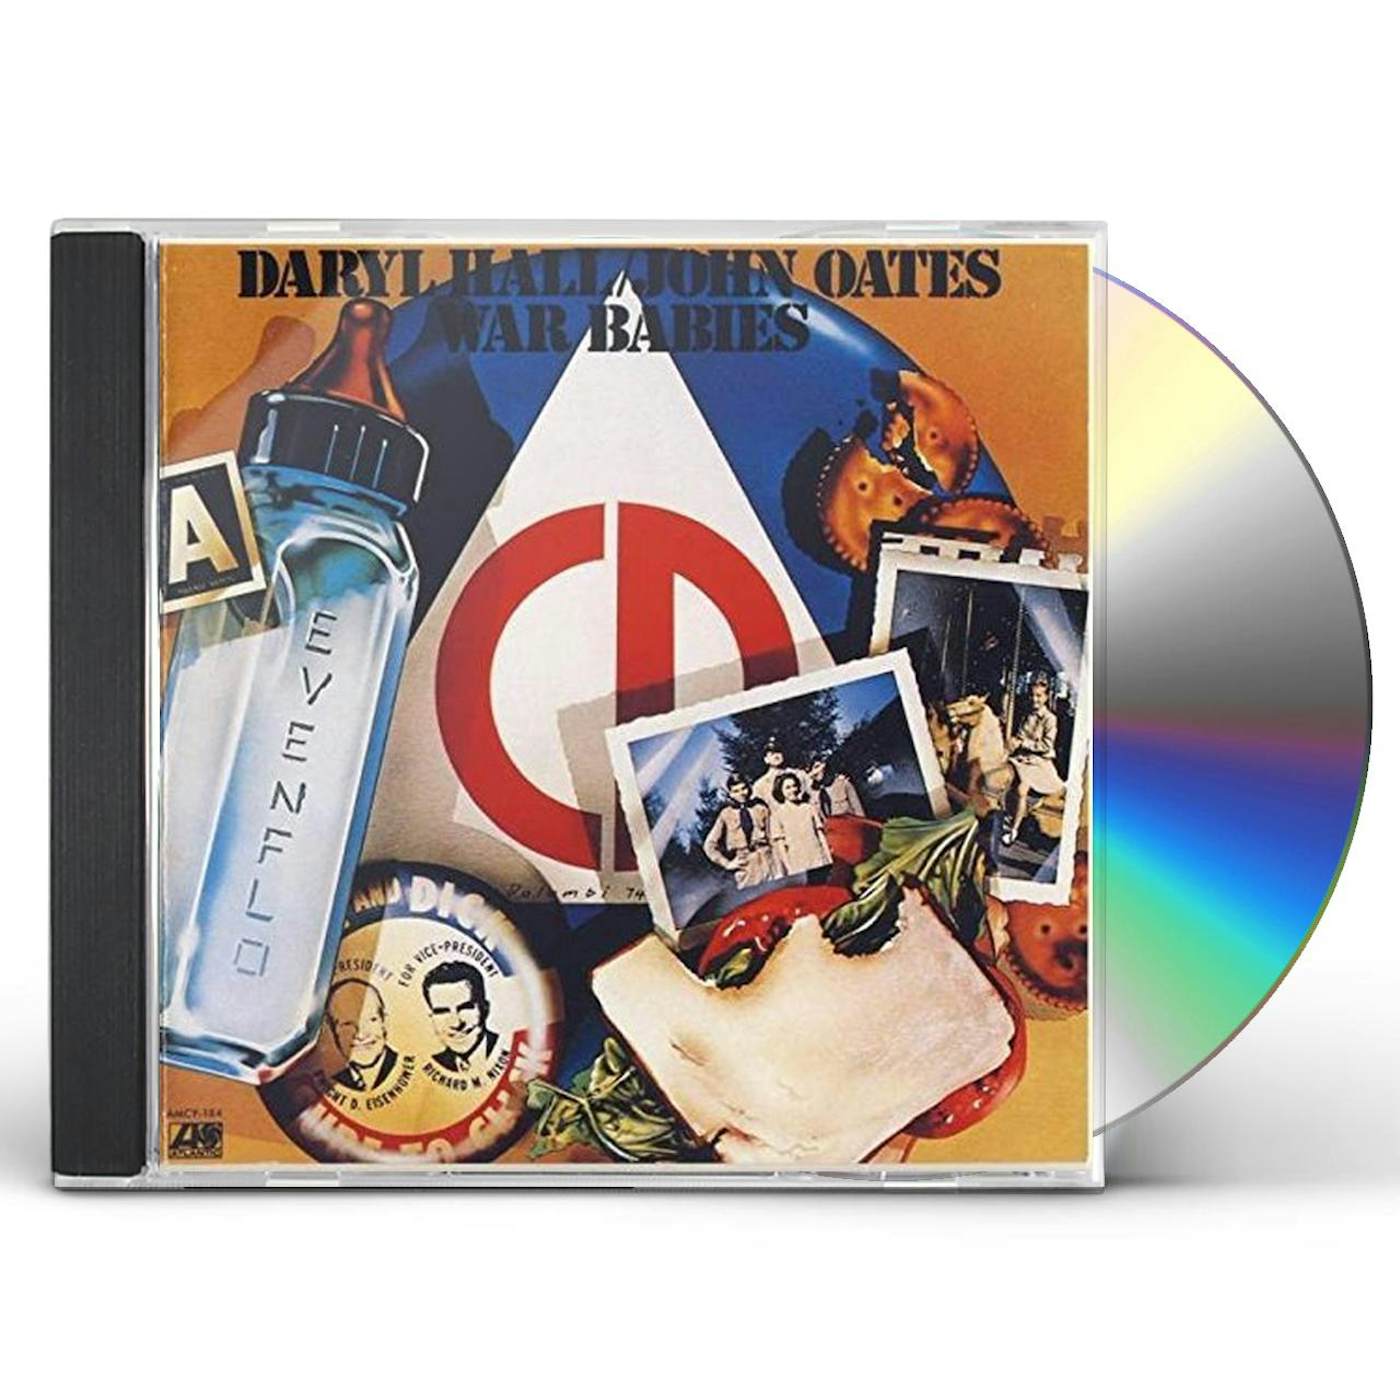 Daryl Hall WAR BABIES CD